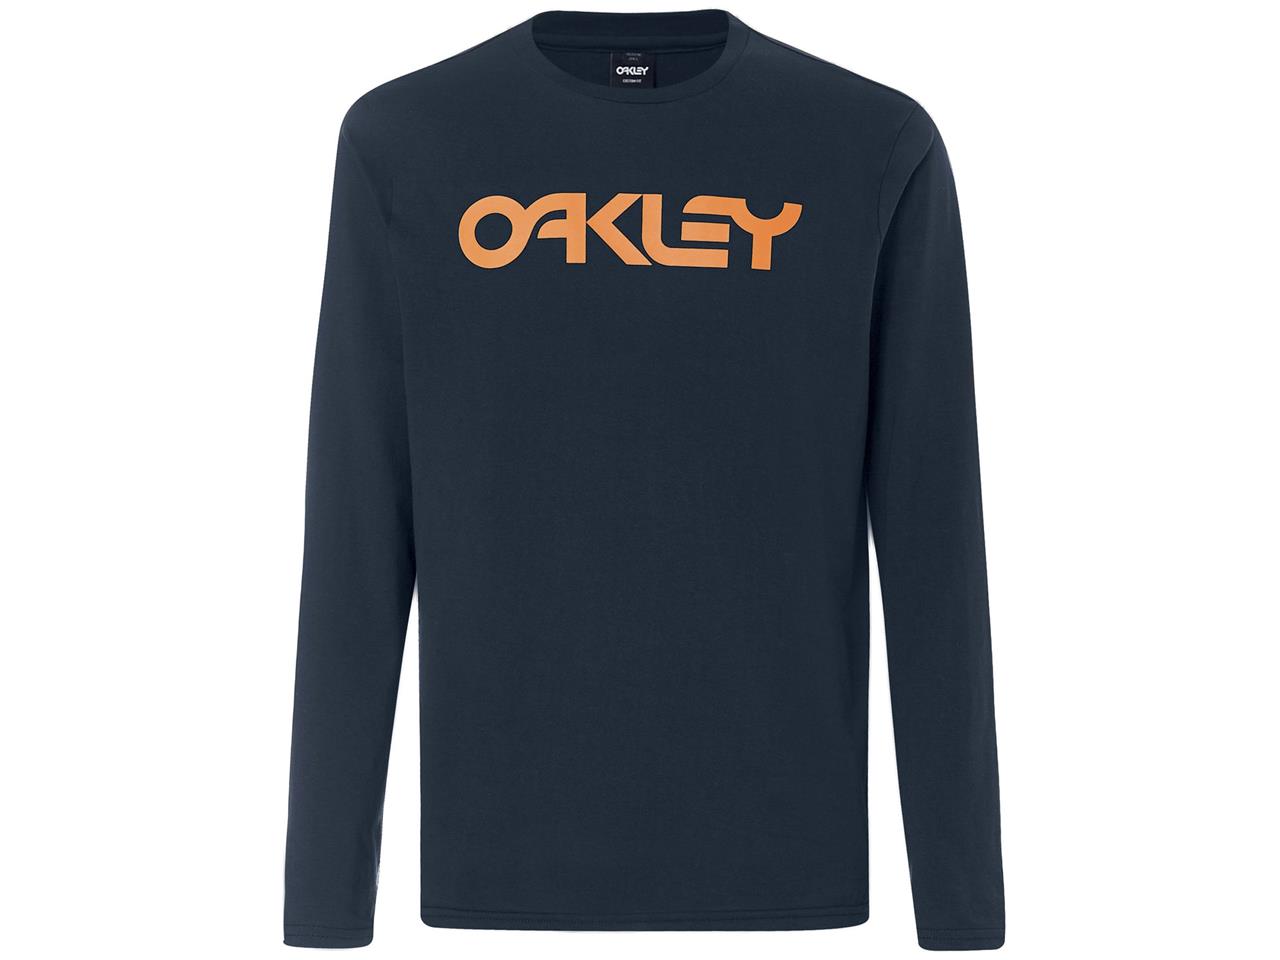 T-Shirt marque Oakley Mark II manche longue Fathom taille S